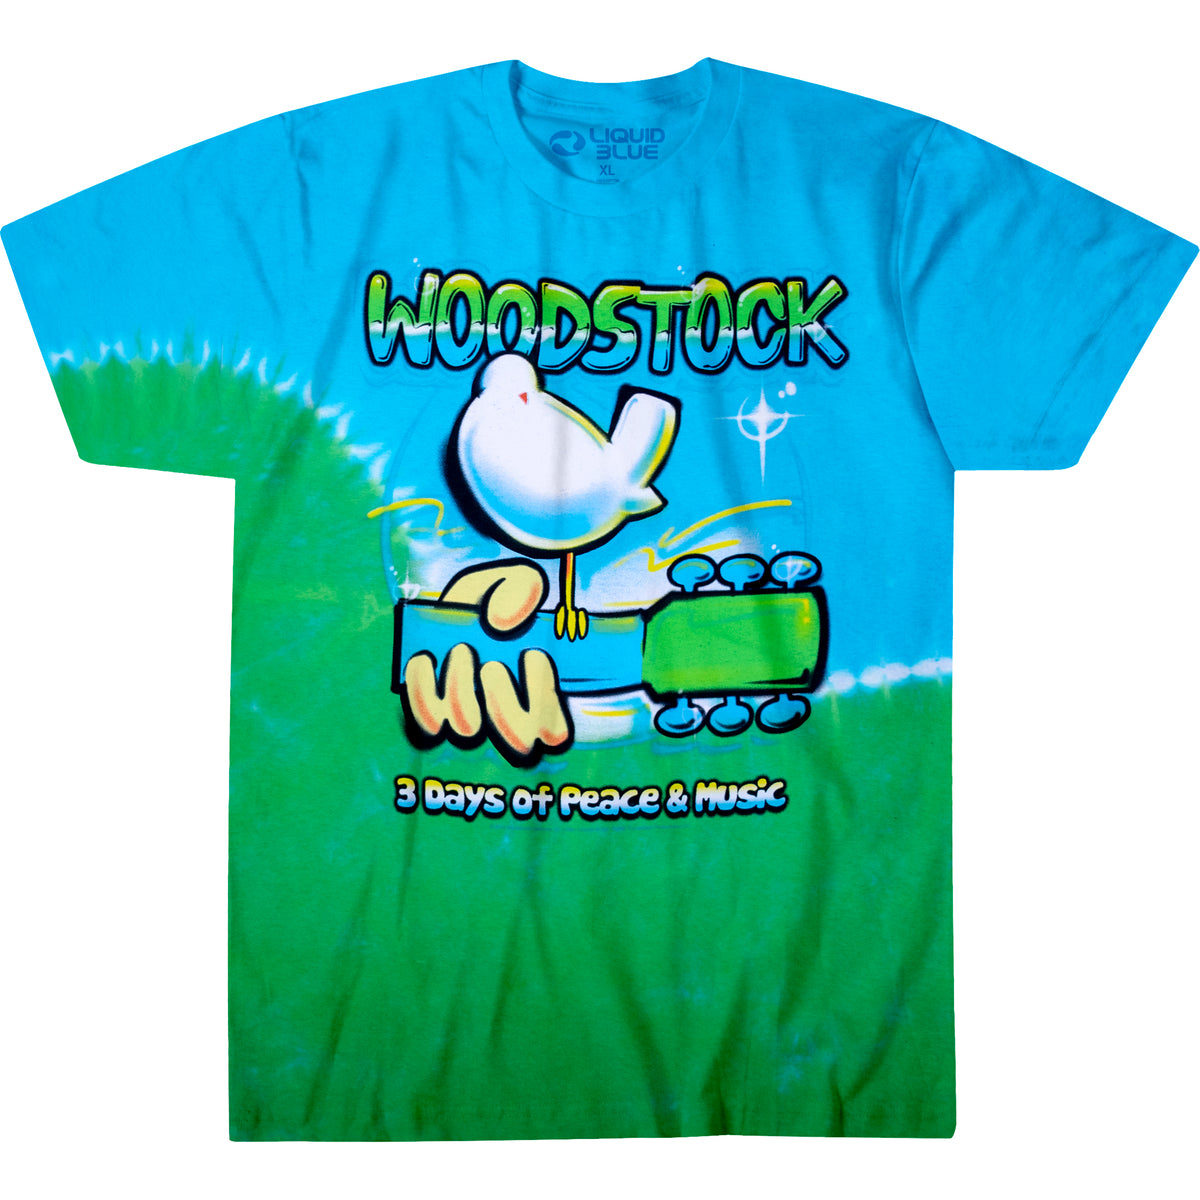 Woodstock - Graffiti Tie Dye T-Shirt (Men)